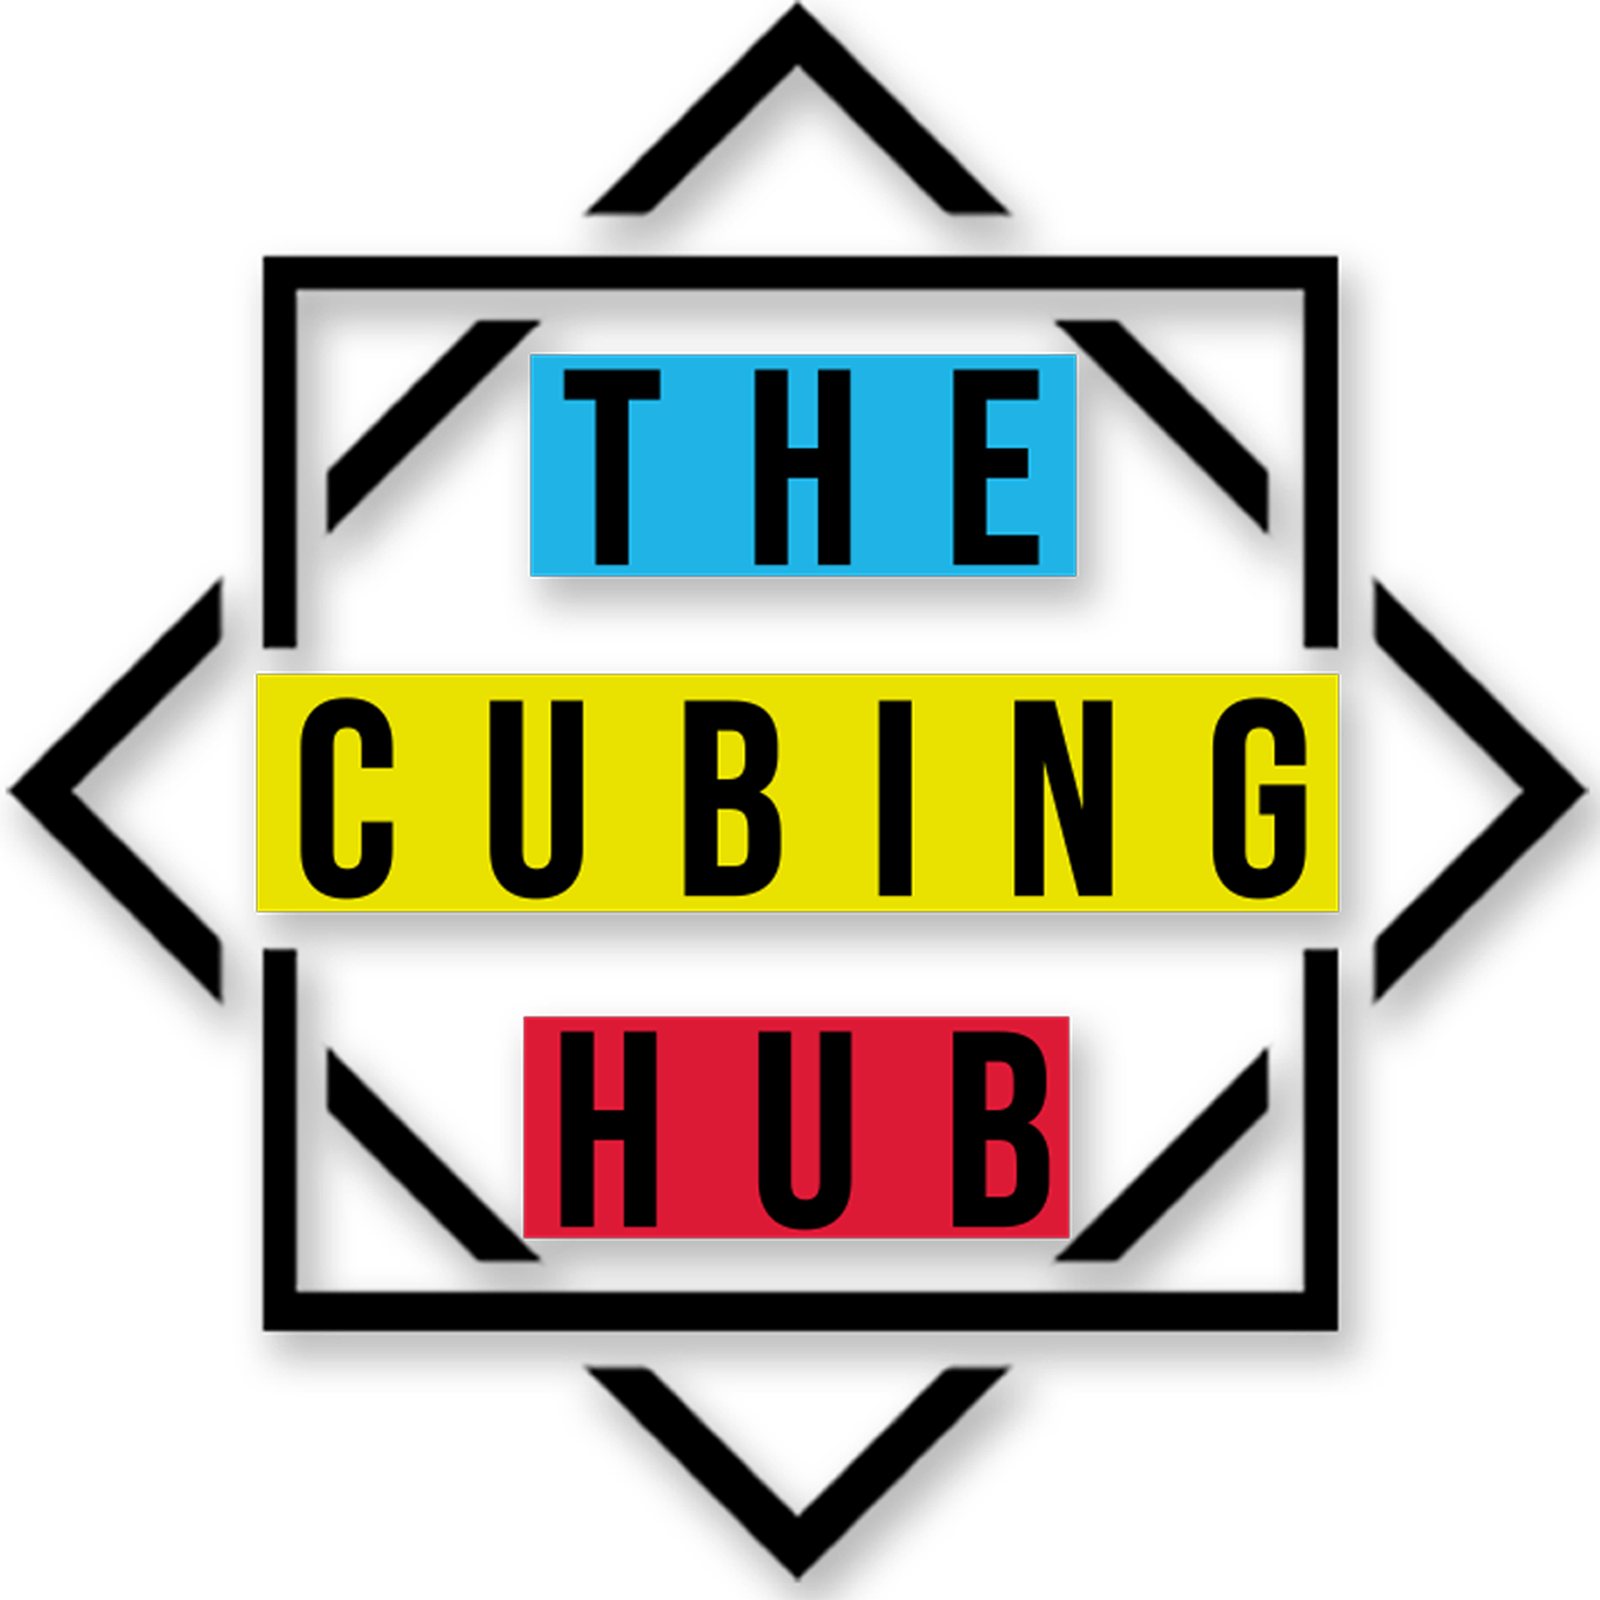 The Cubing Hub